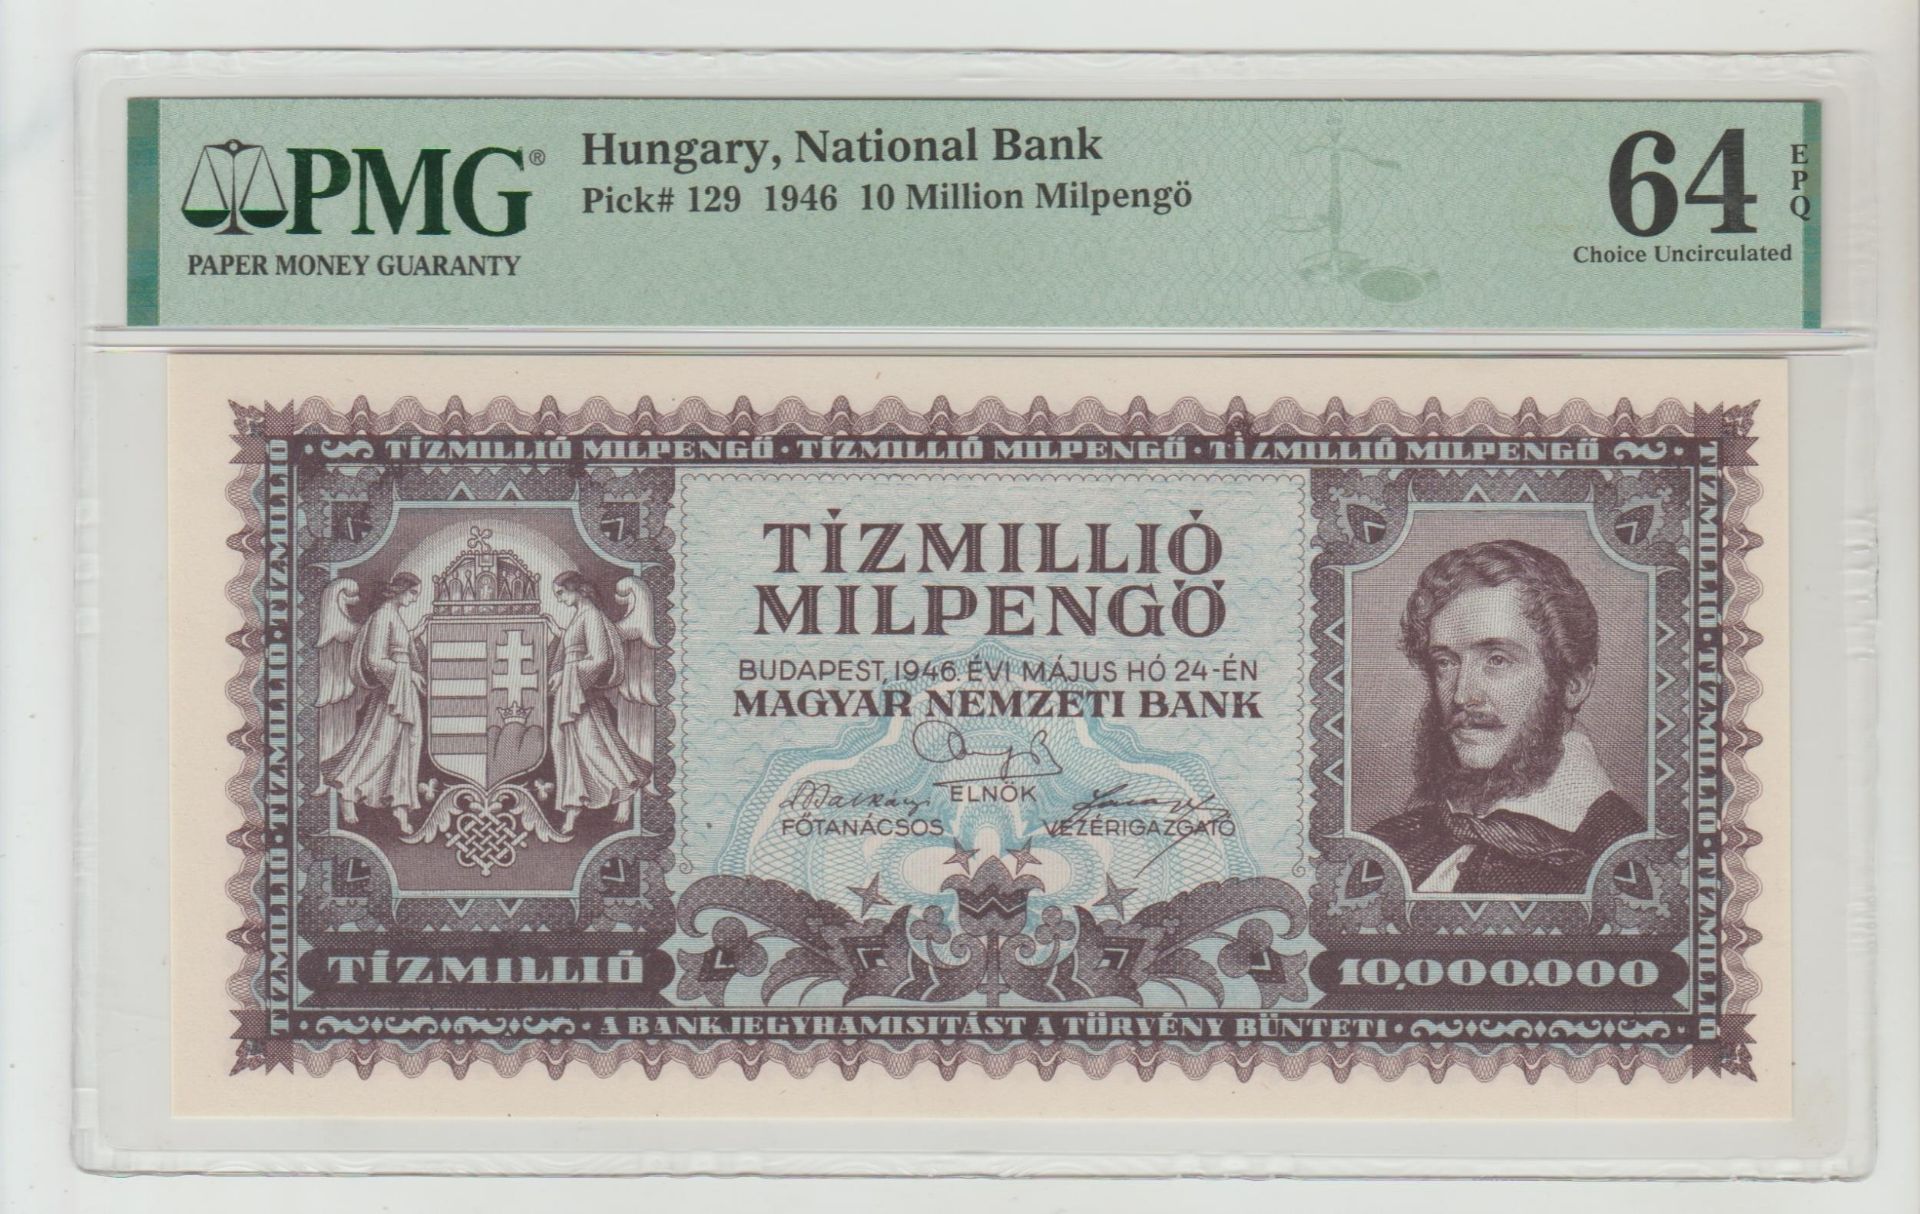 Hungary, 10 Million Milpengo, 1946 year